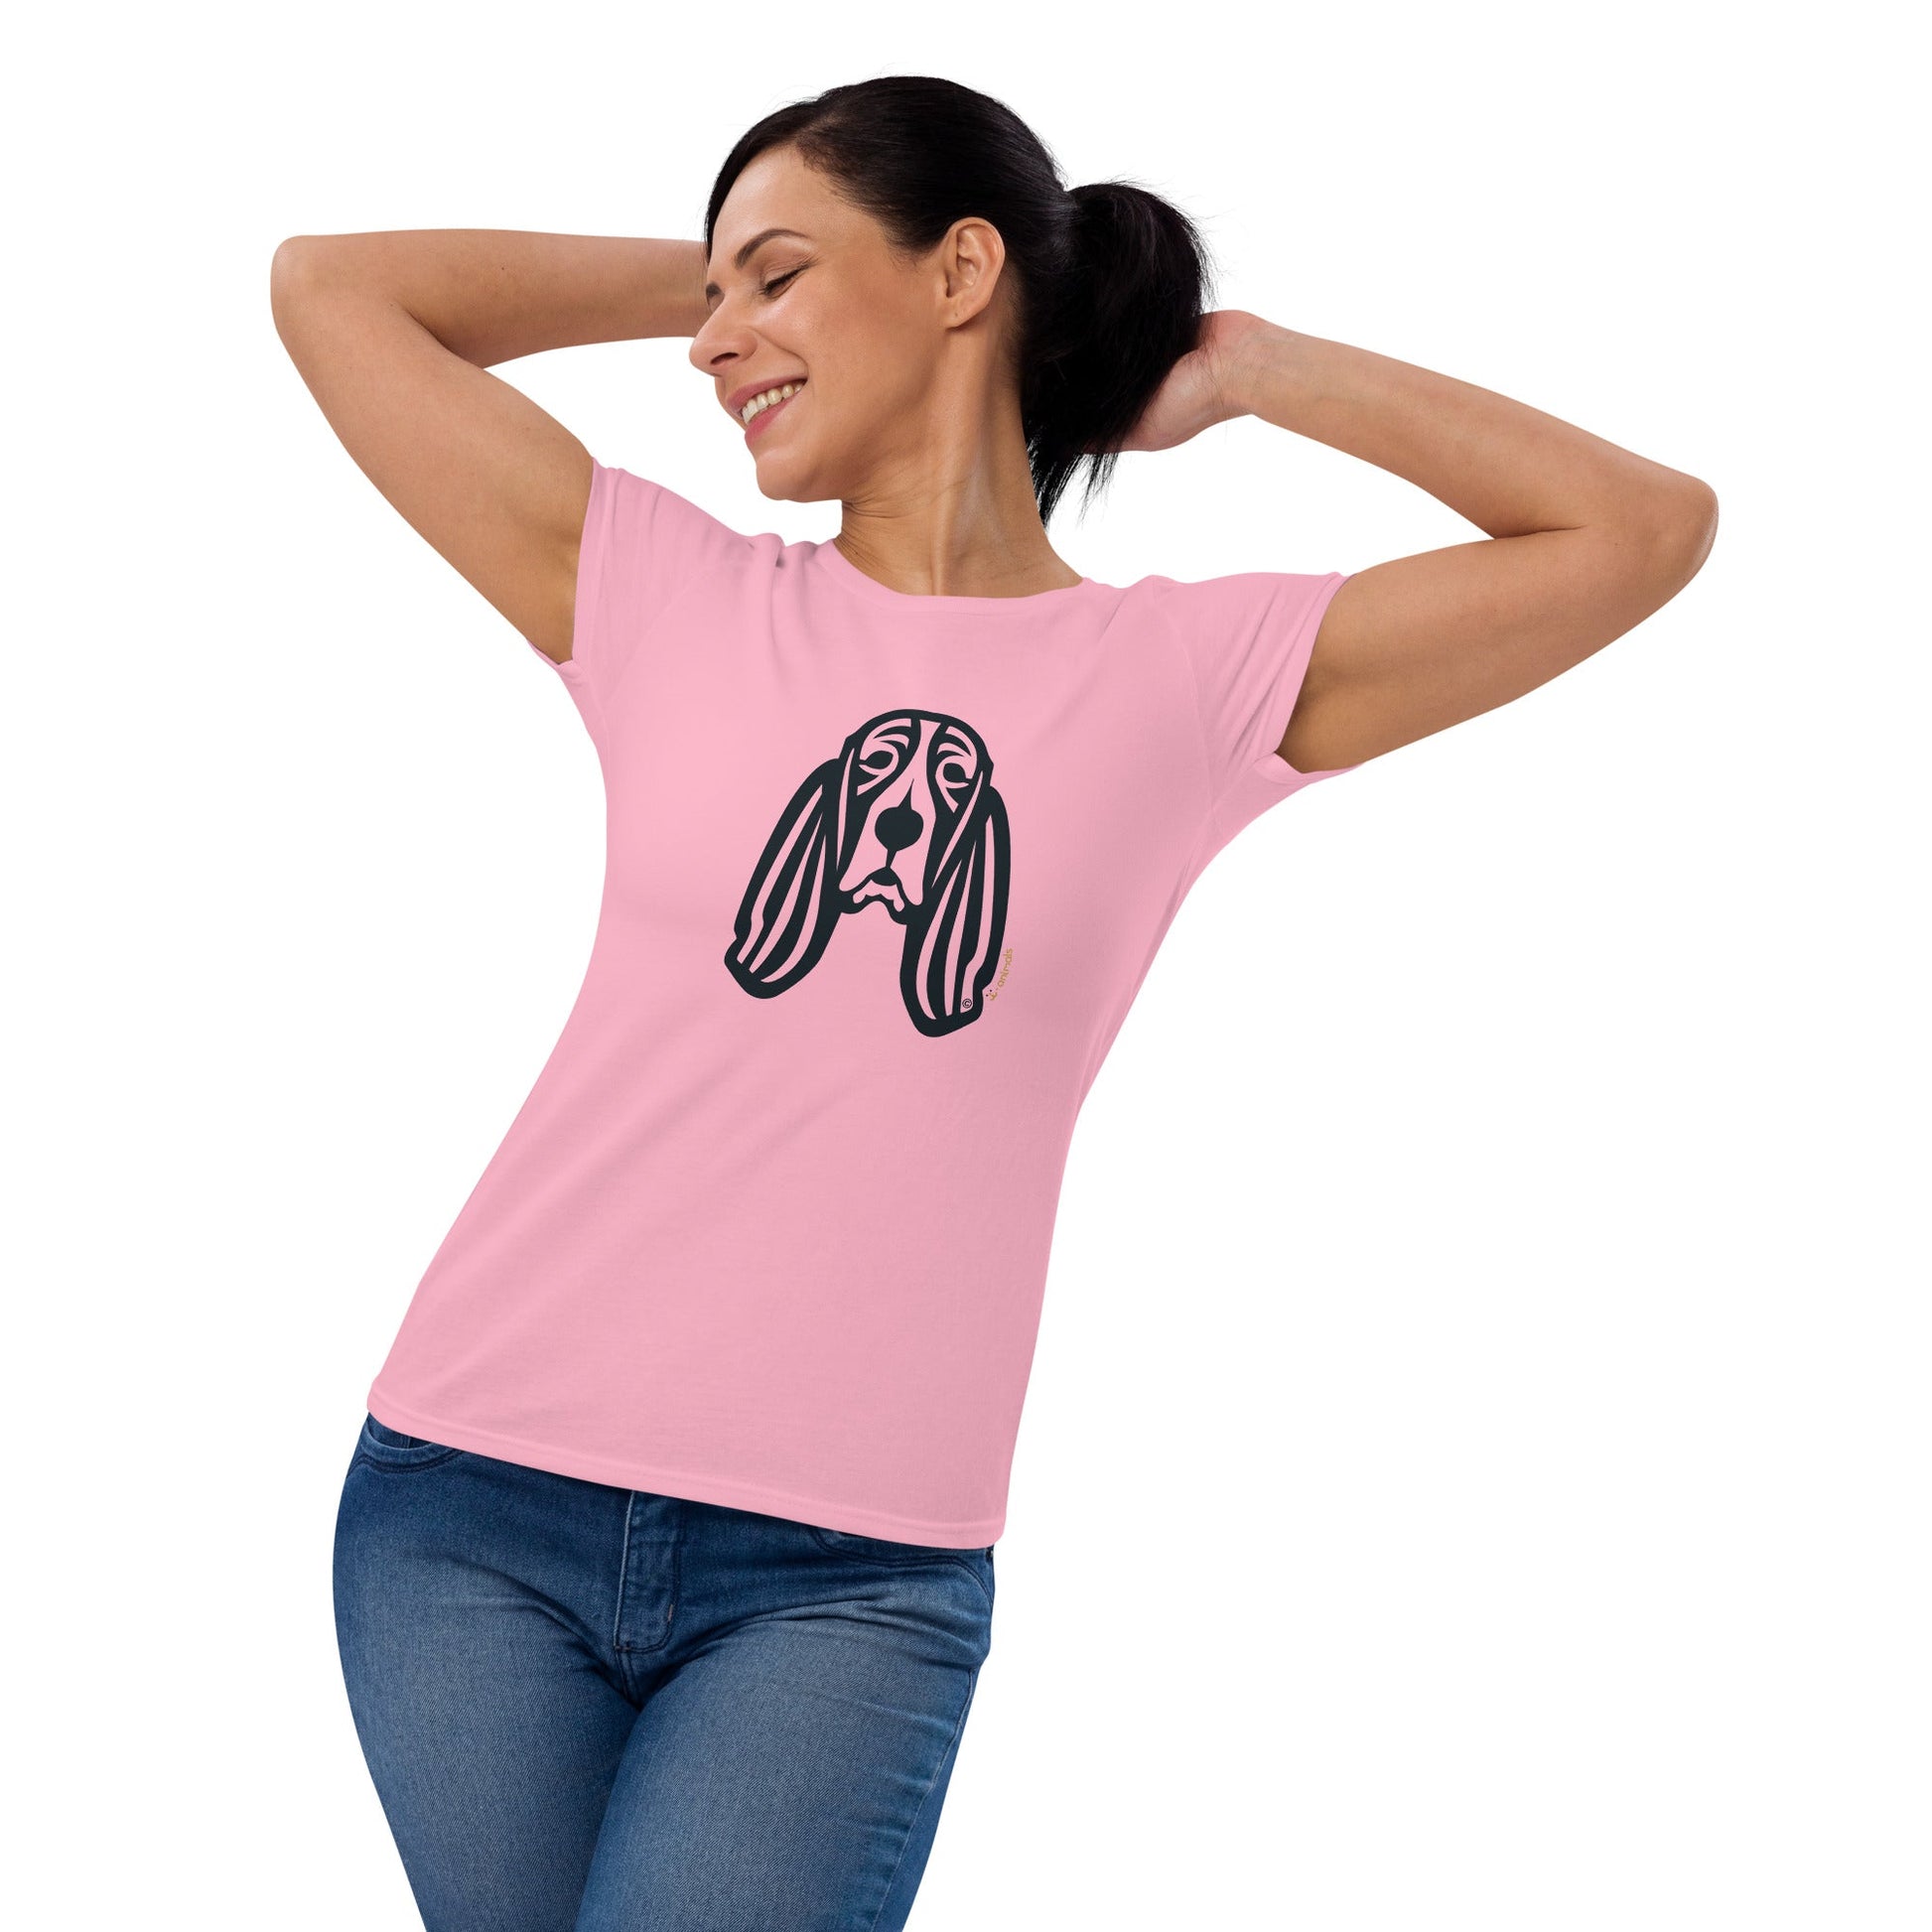 Camiseta feminina de manga curta - Basset Hound - Tribal - Cores Claras i-animals